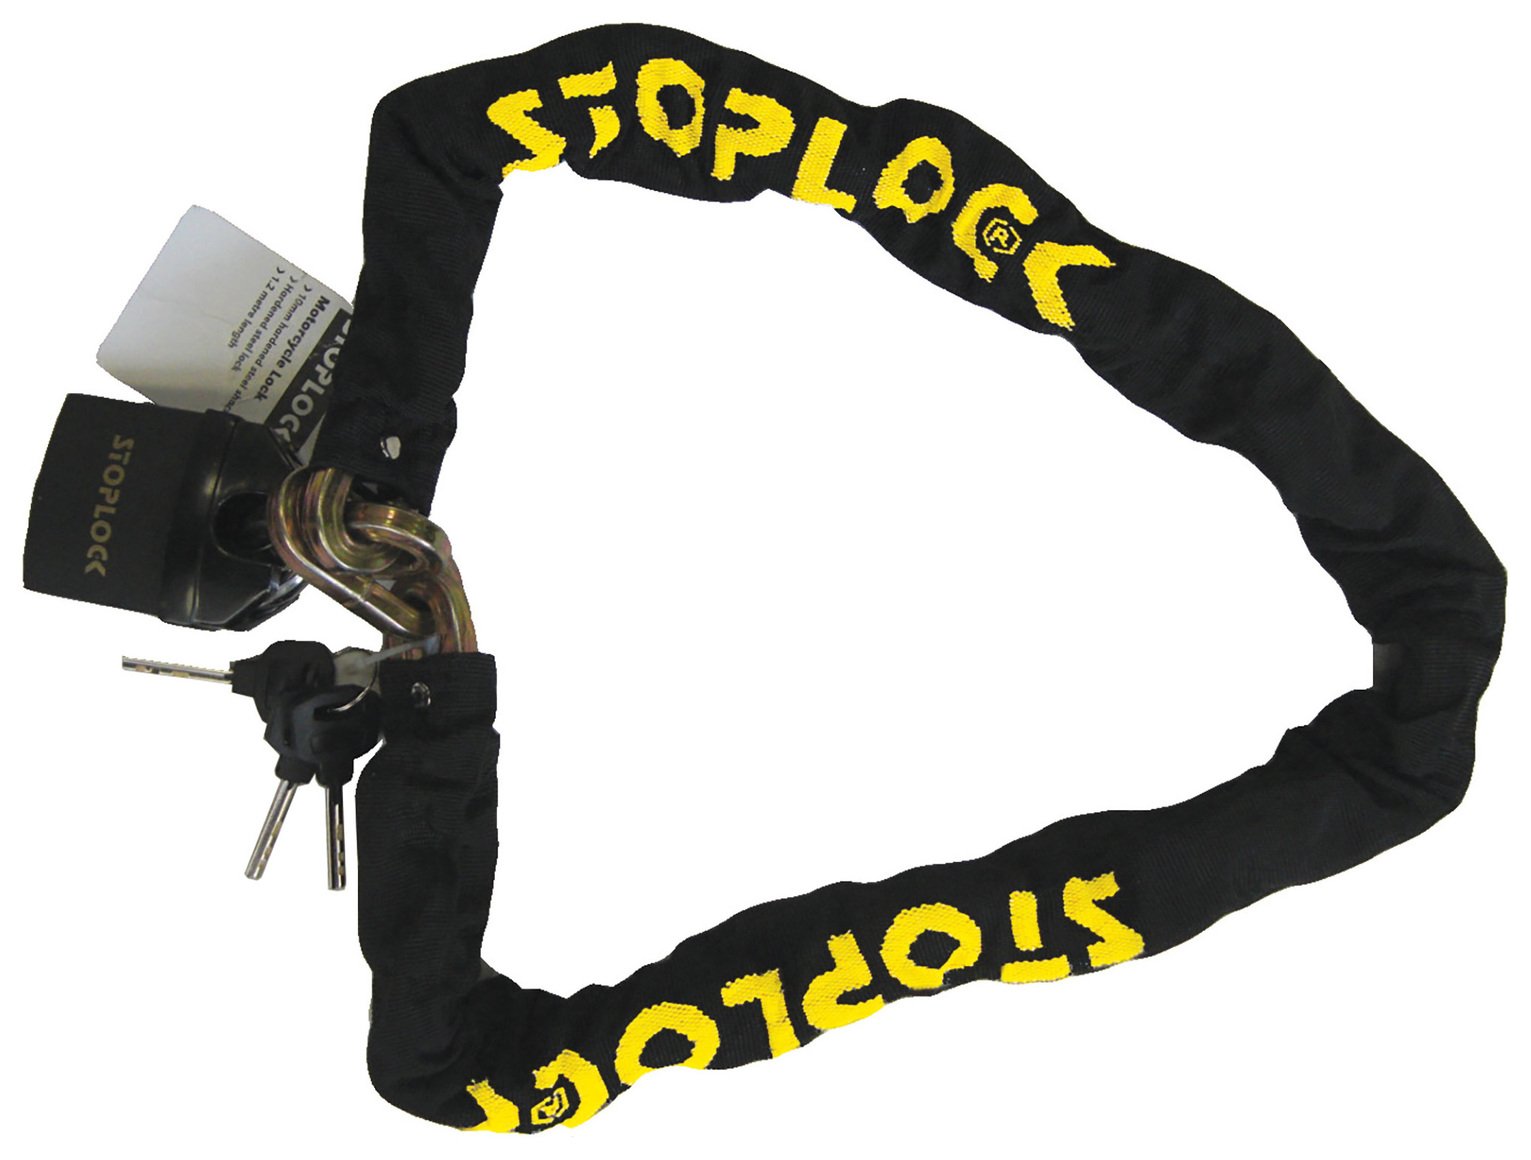 Stoplock Chain Motorbike Lock Review